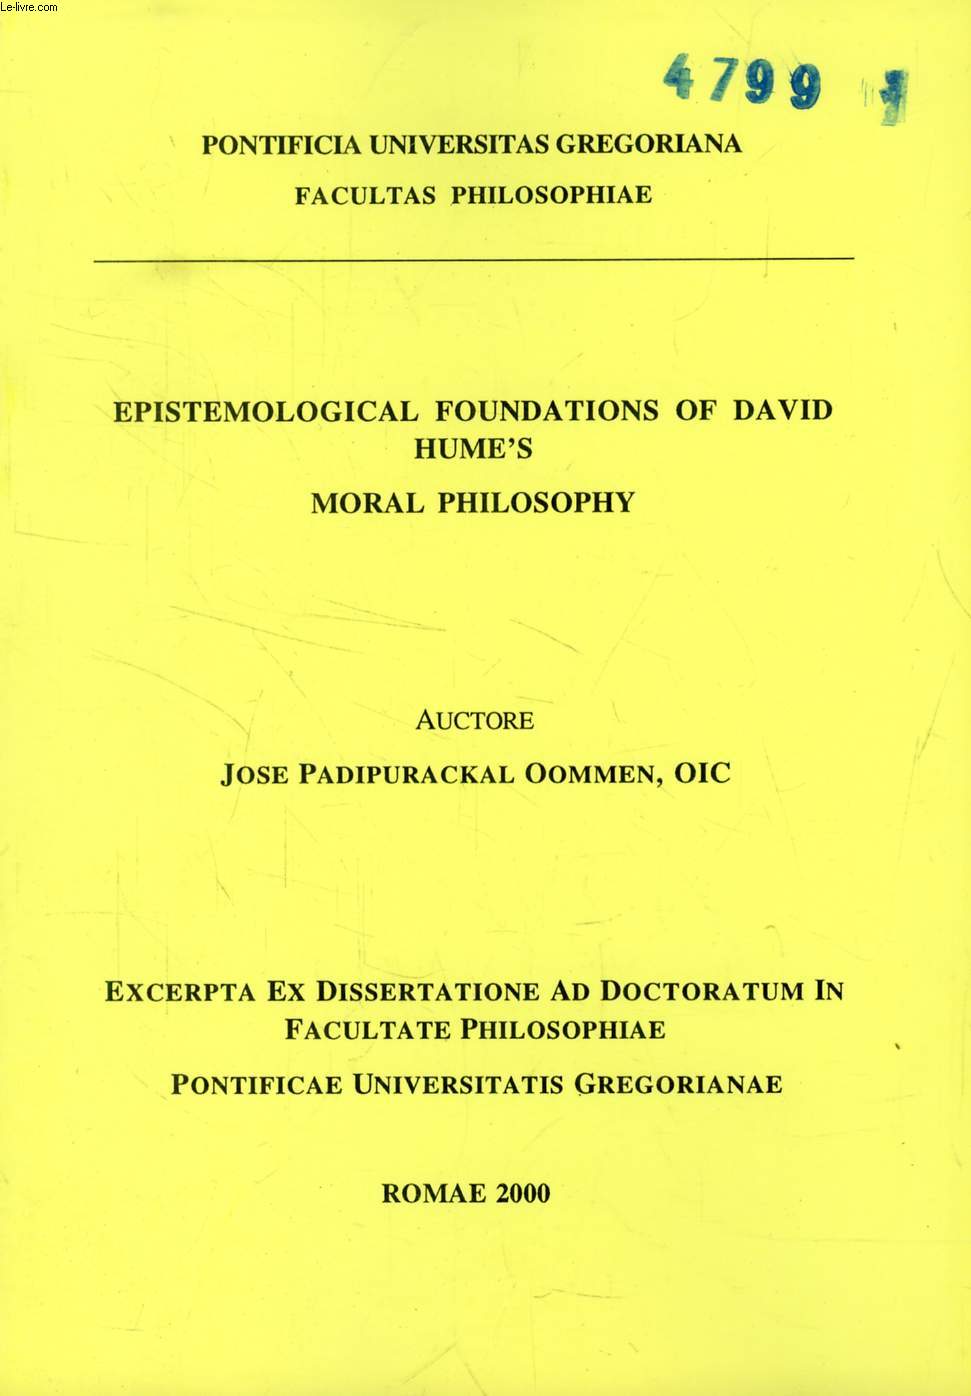 EPISTEMOLOGICAL FOUNDATIONS OF DAVID HUME'S MORAL PHILOSOPHY (EXCERPTA EX DISSERTATIONE)